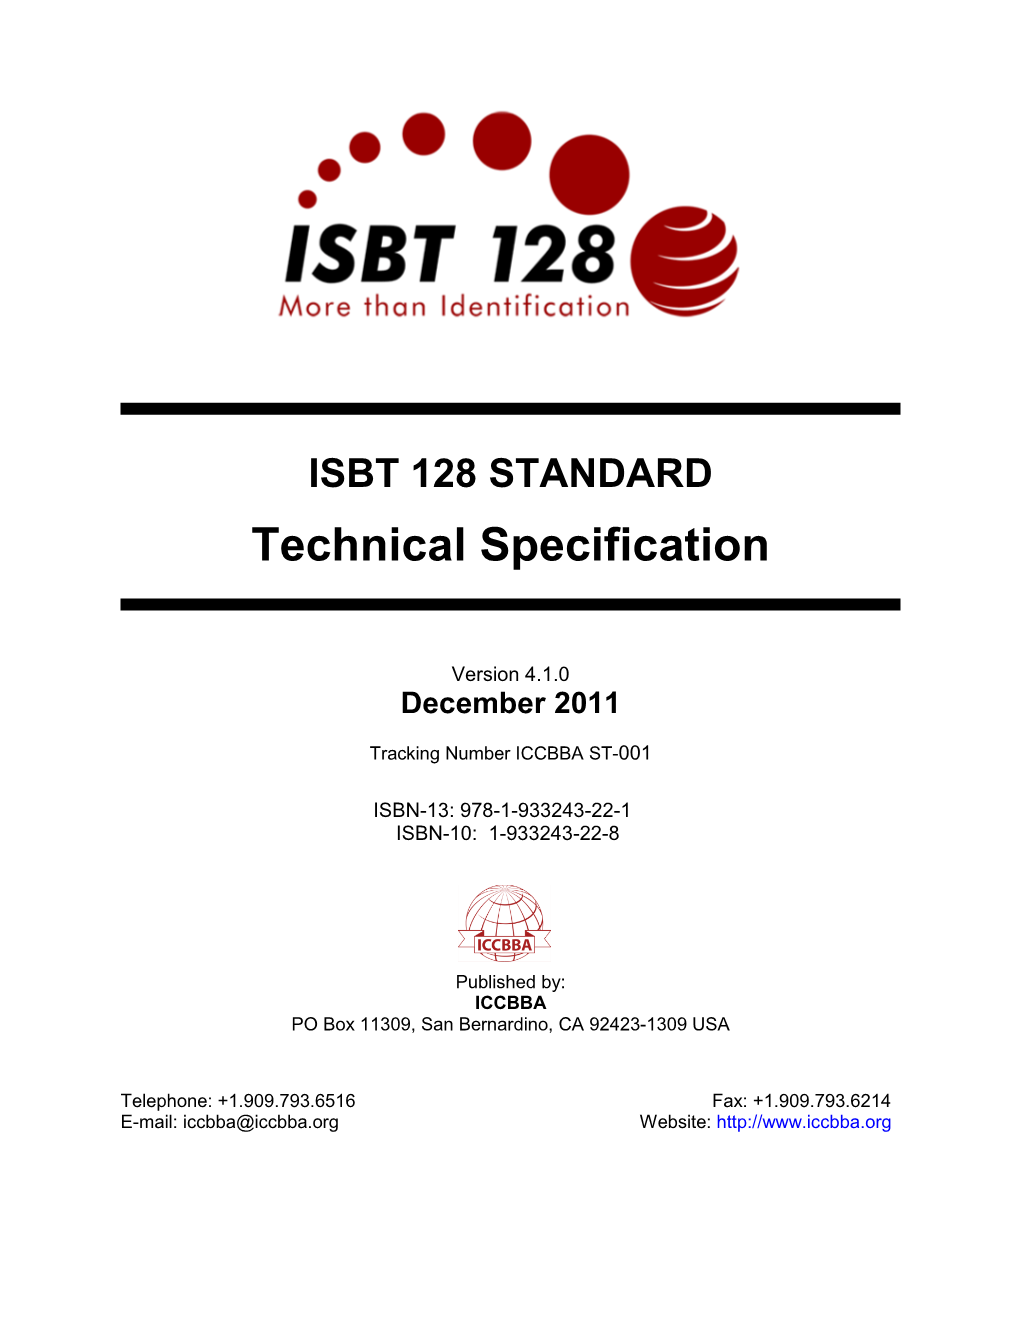 ISBT 128 Standard Technical Specification Version Control: Version 4.0.1 Vs